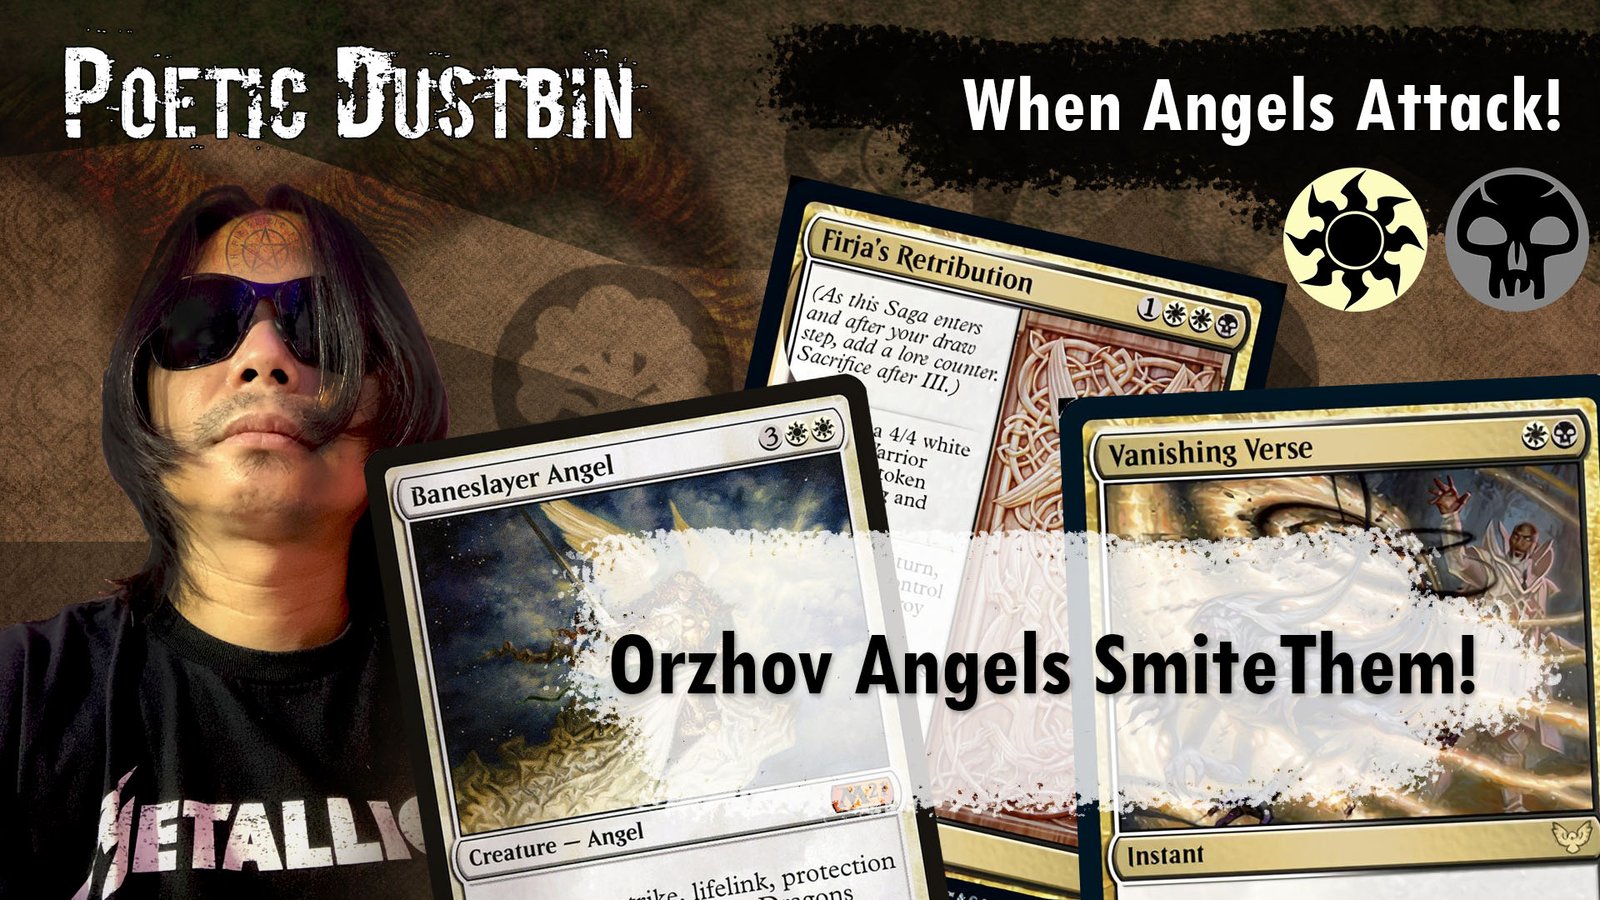 MTG Arena - Standard Strixhaven Orzhov Angel Deck with Yorion, Baneslayer Angel and Vanishing Verse